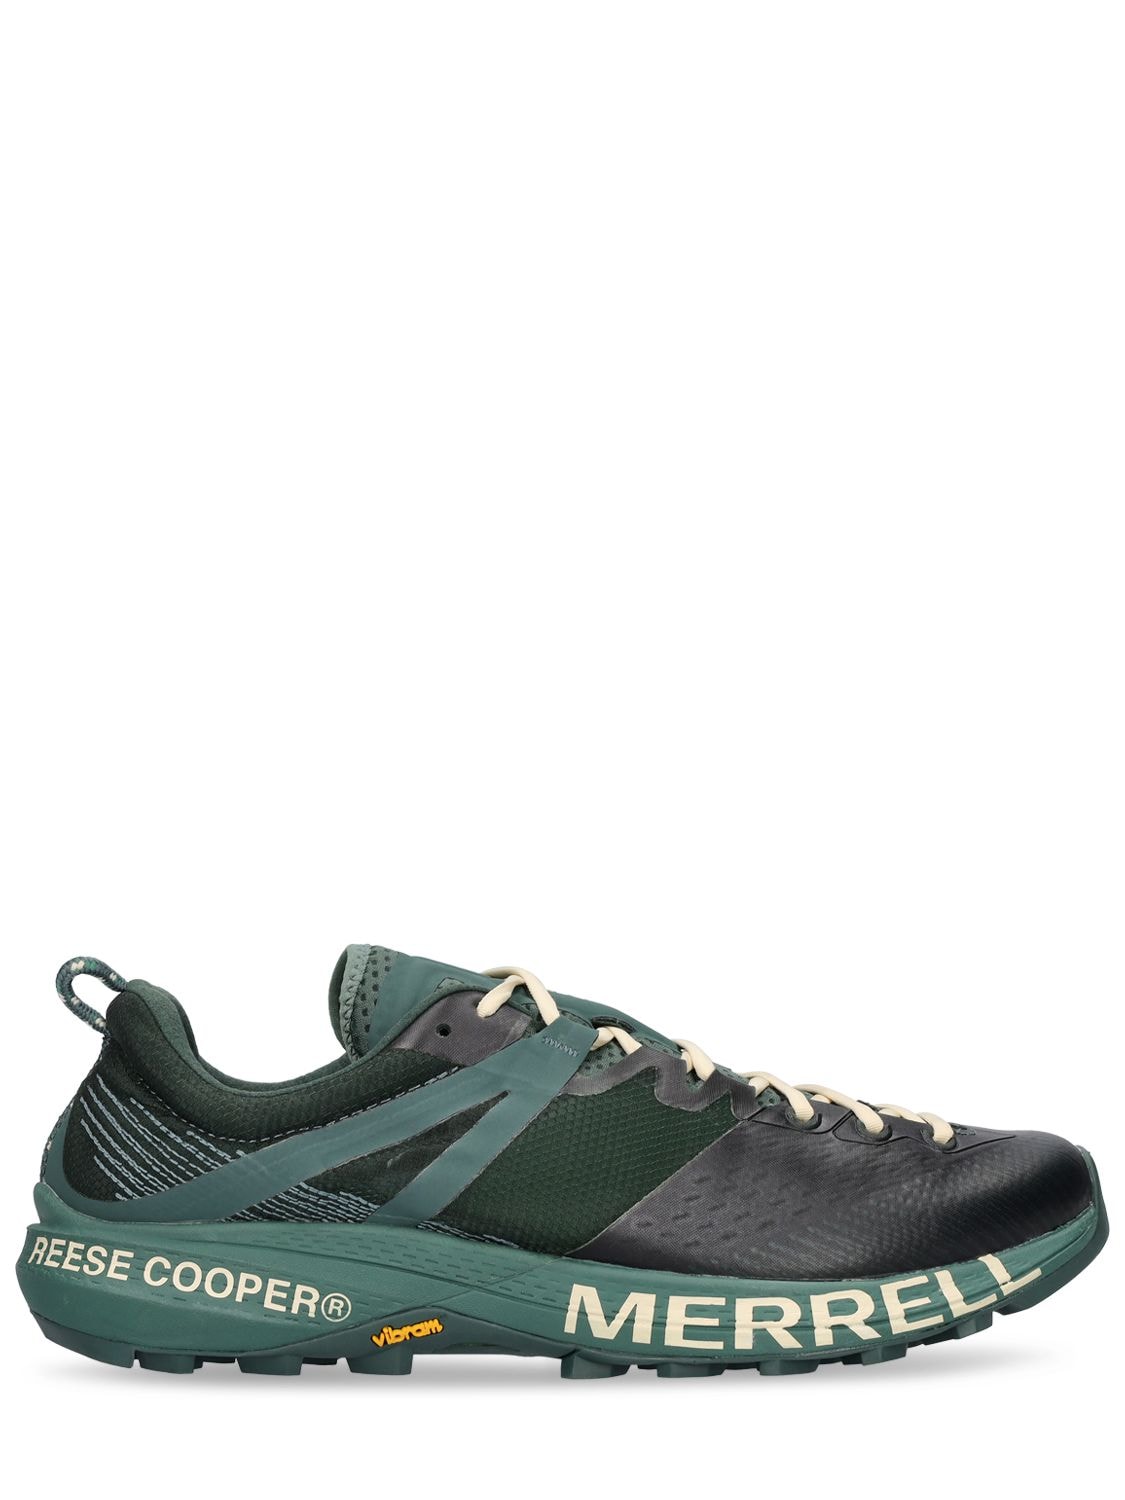 MERRELL Reese Cooper Mqm Sneakers